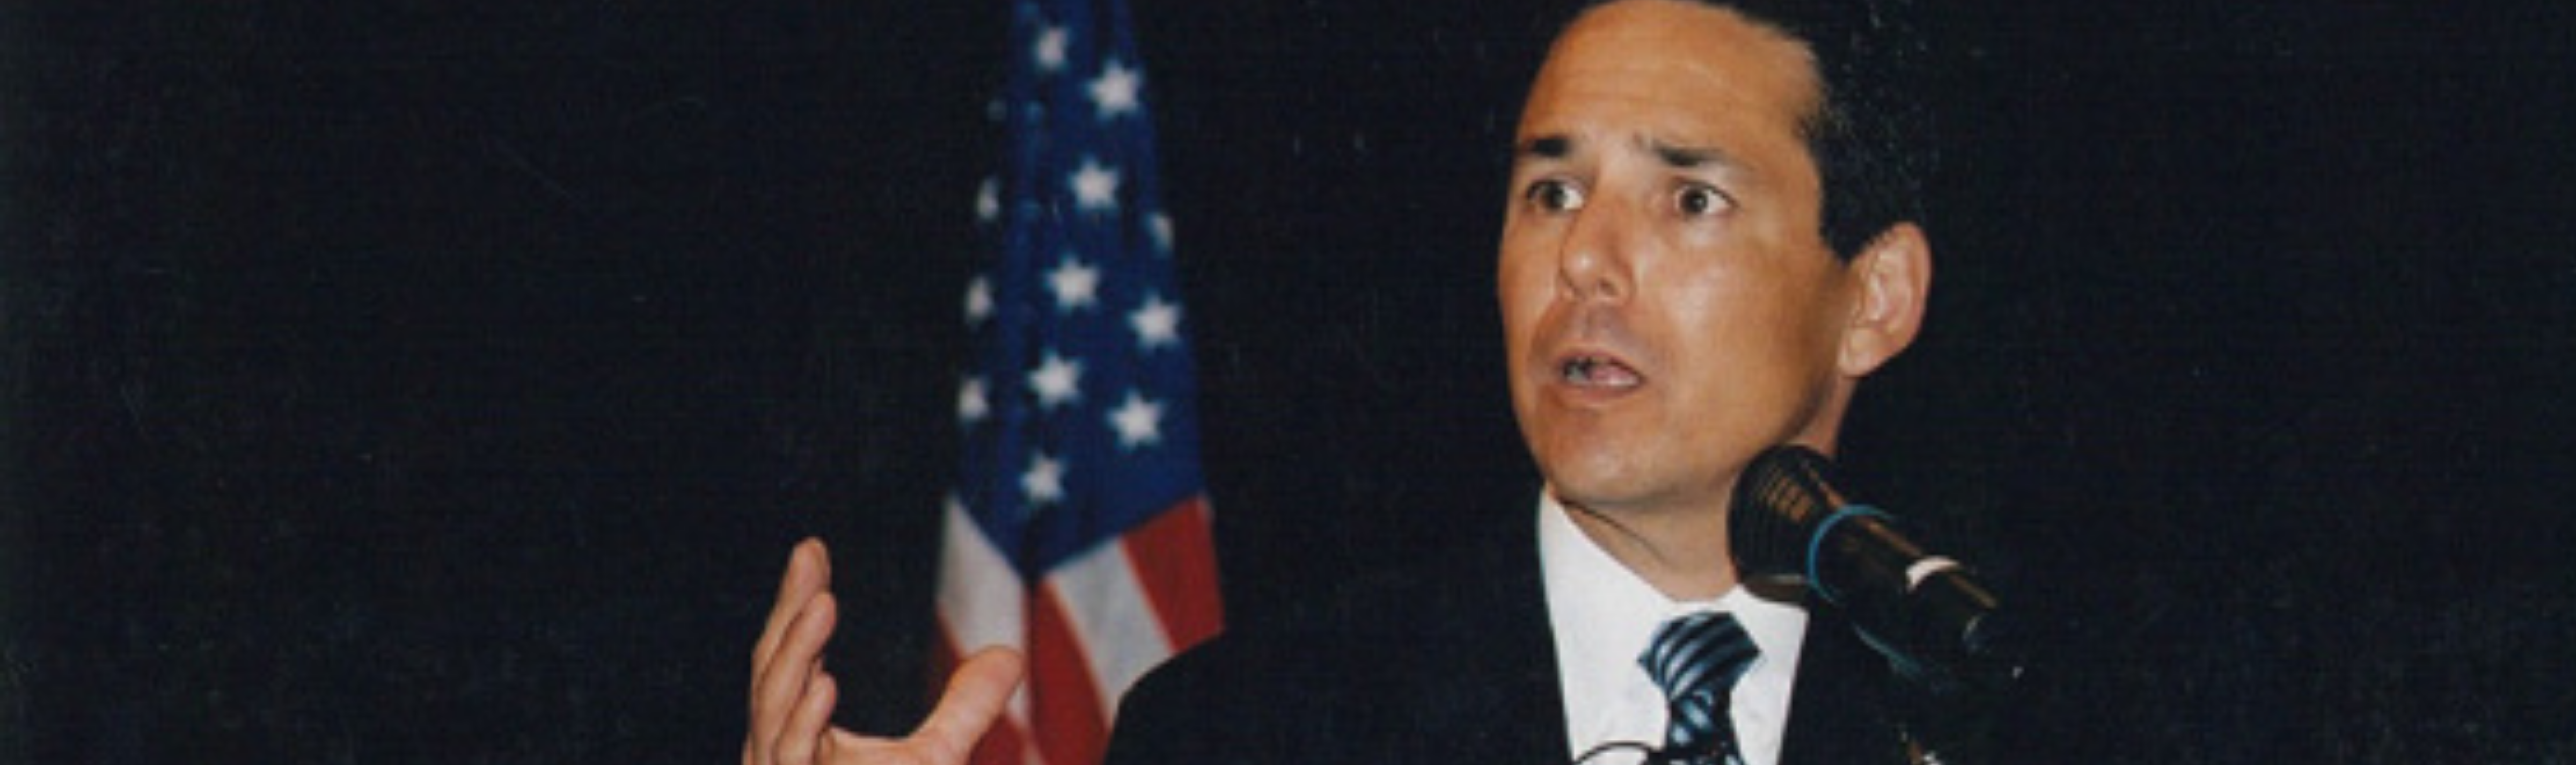 ProcureAmerica CEO Fred Armendariz Reflects on 9/11